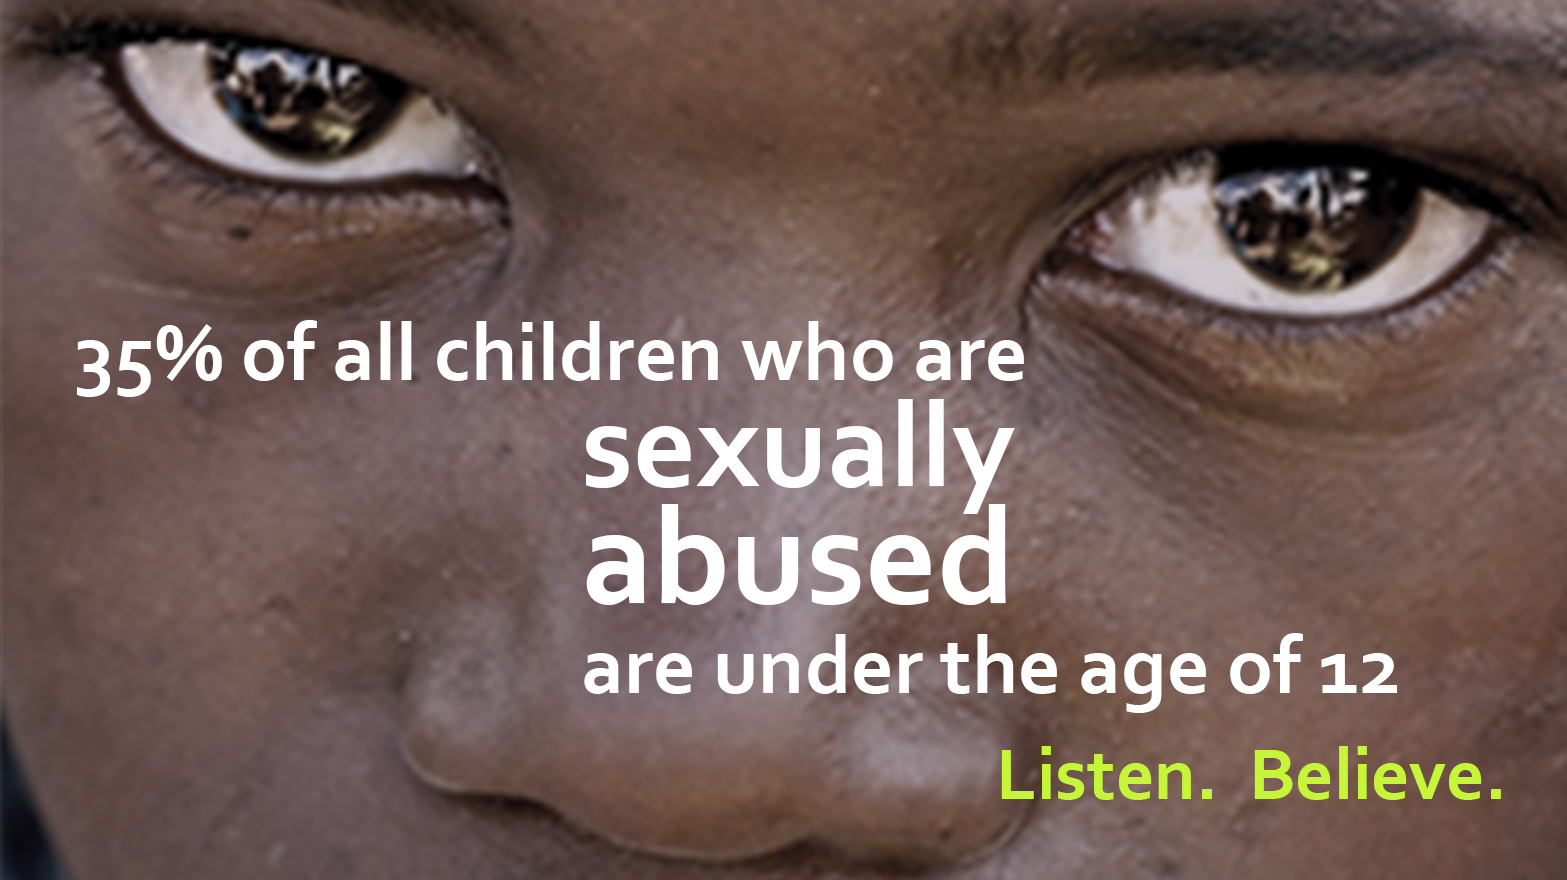 April Child Abuse Prevention Campaign Bus Poster